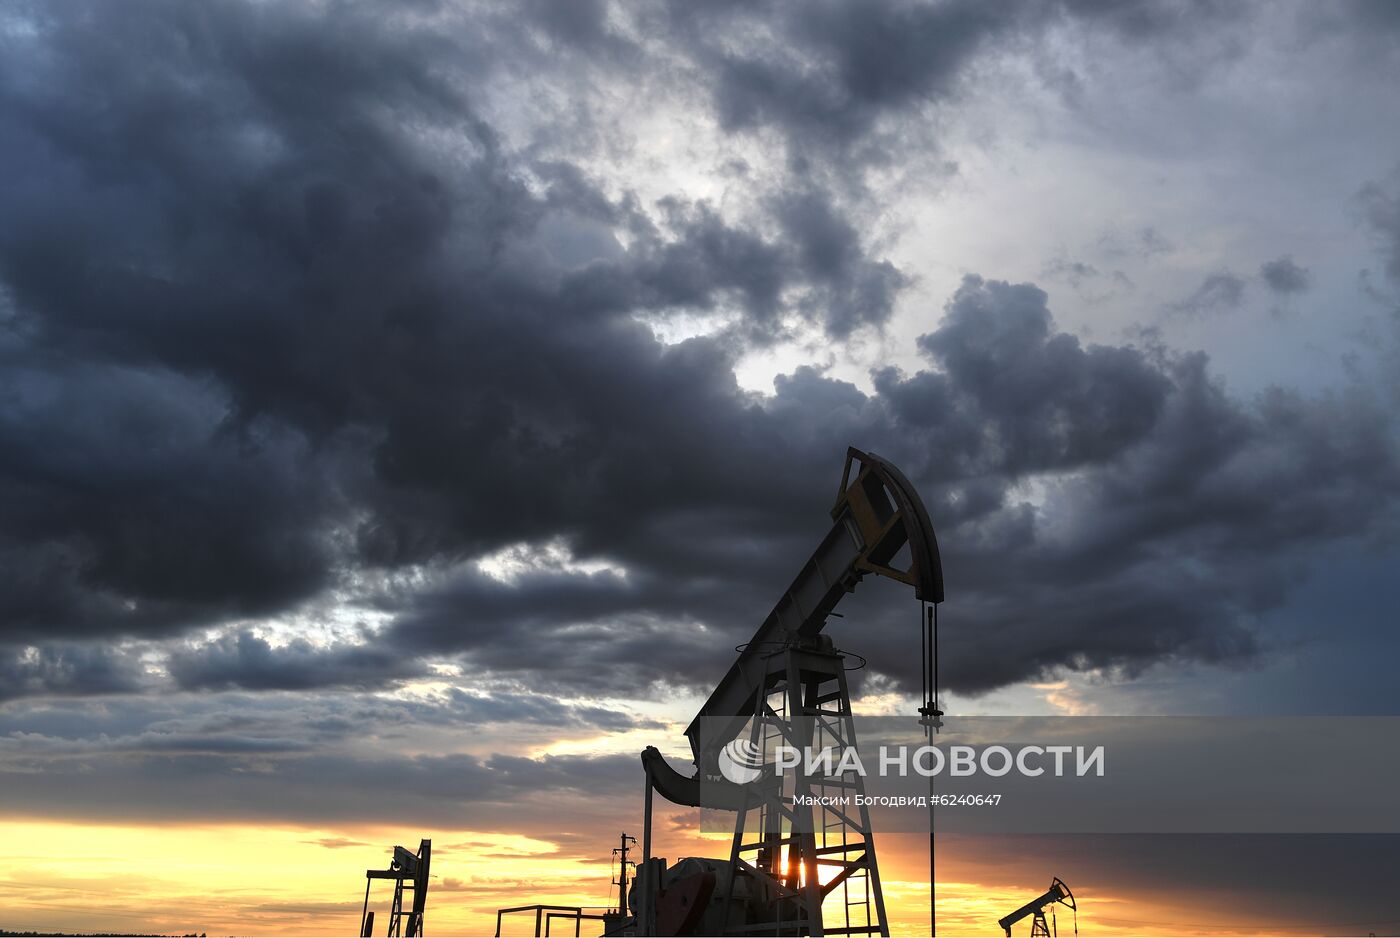 Работа нефтяных станков - качалок